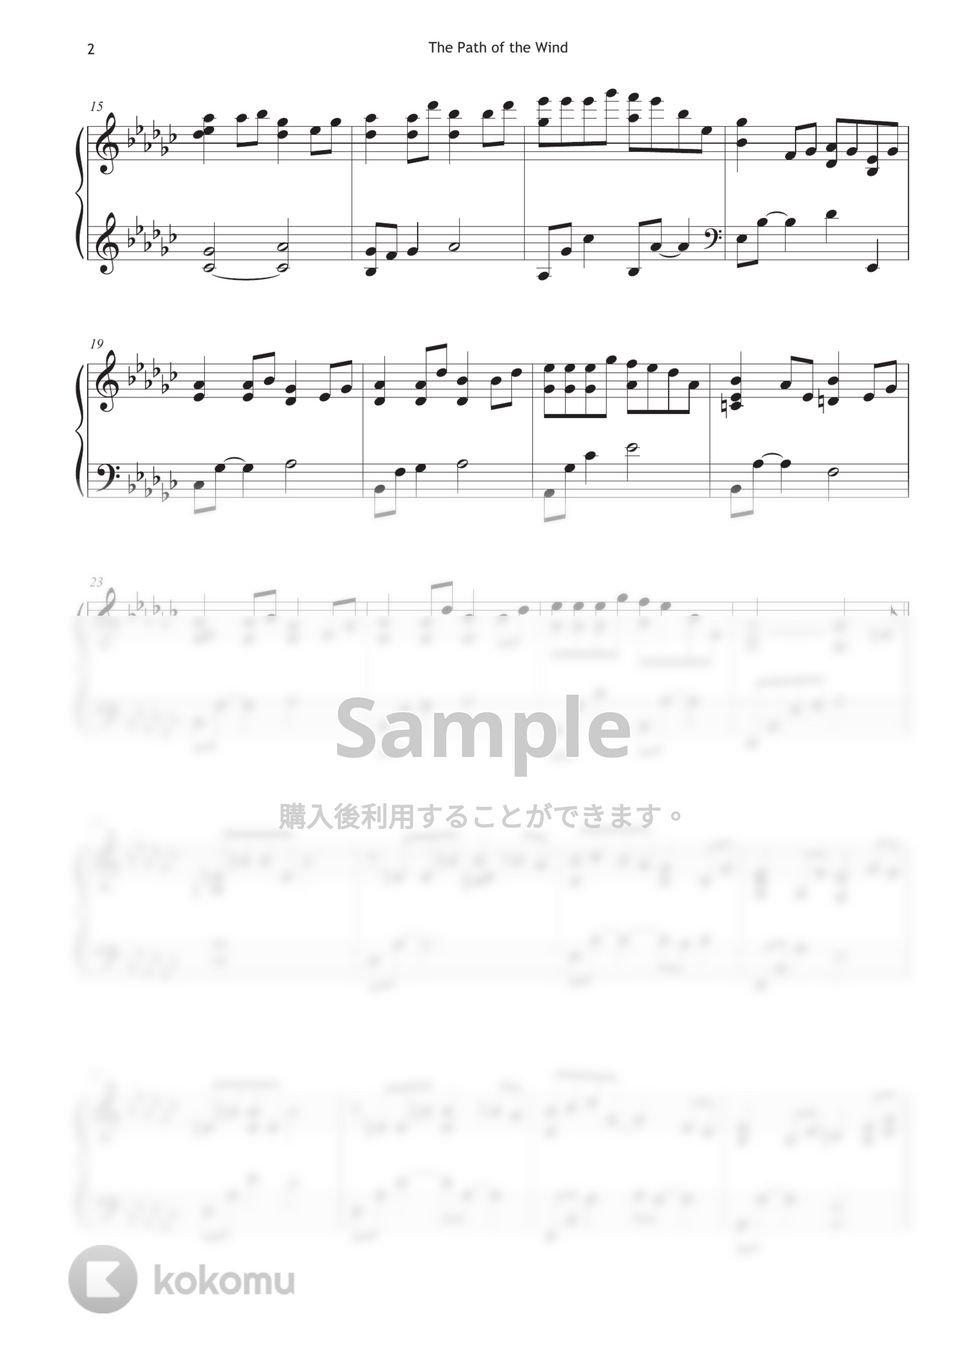 Joe Hisaishi - 風のとおり道 (となりのトトロ OST) by Pidalso